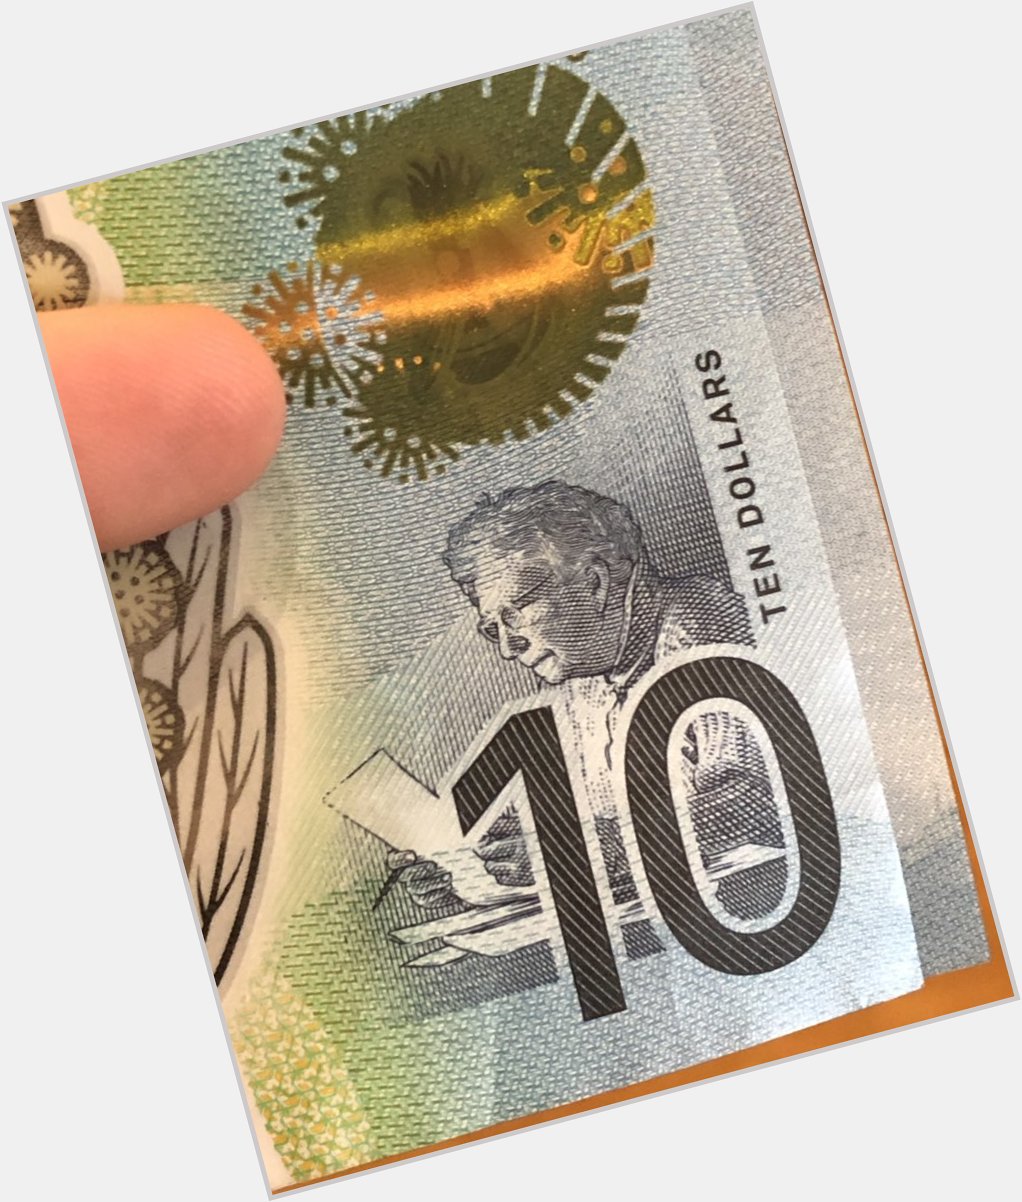 I got Bernie Sanders put on the Australian ten dollar note for his birthday. Happy birthday Bernie! 